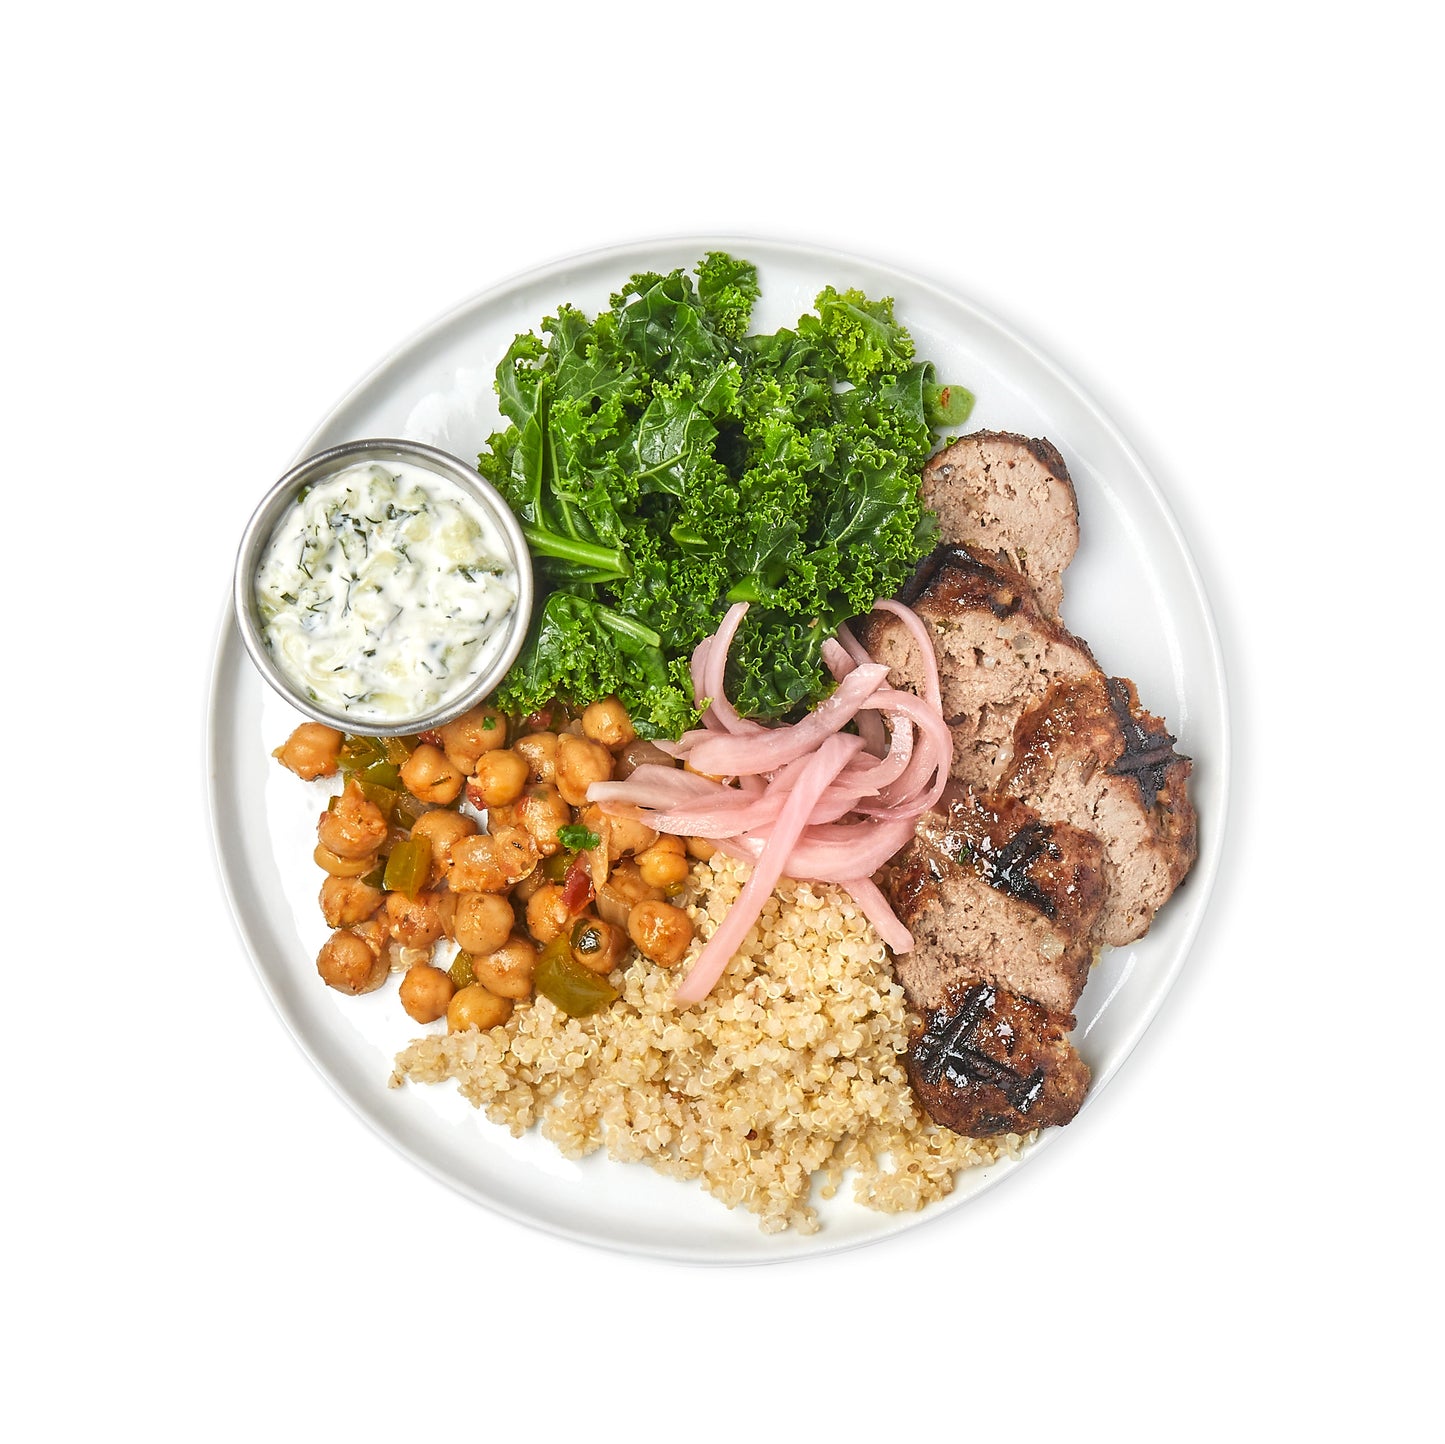 lamb gyro kebab bowl azuluna foods Premium Pasture-Raised Meals Delivery